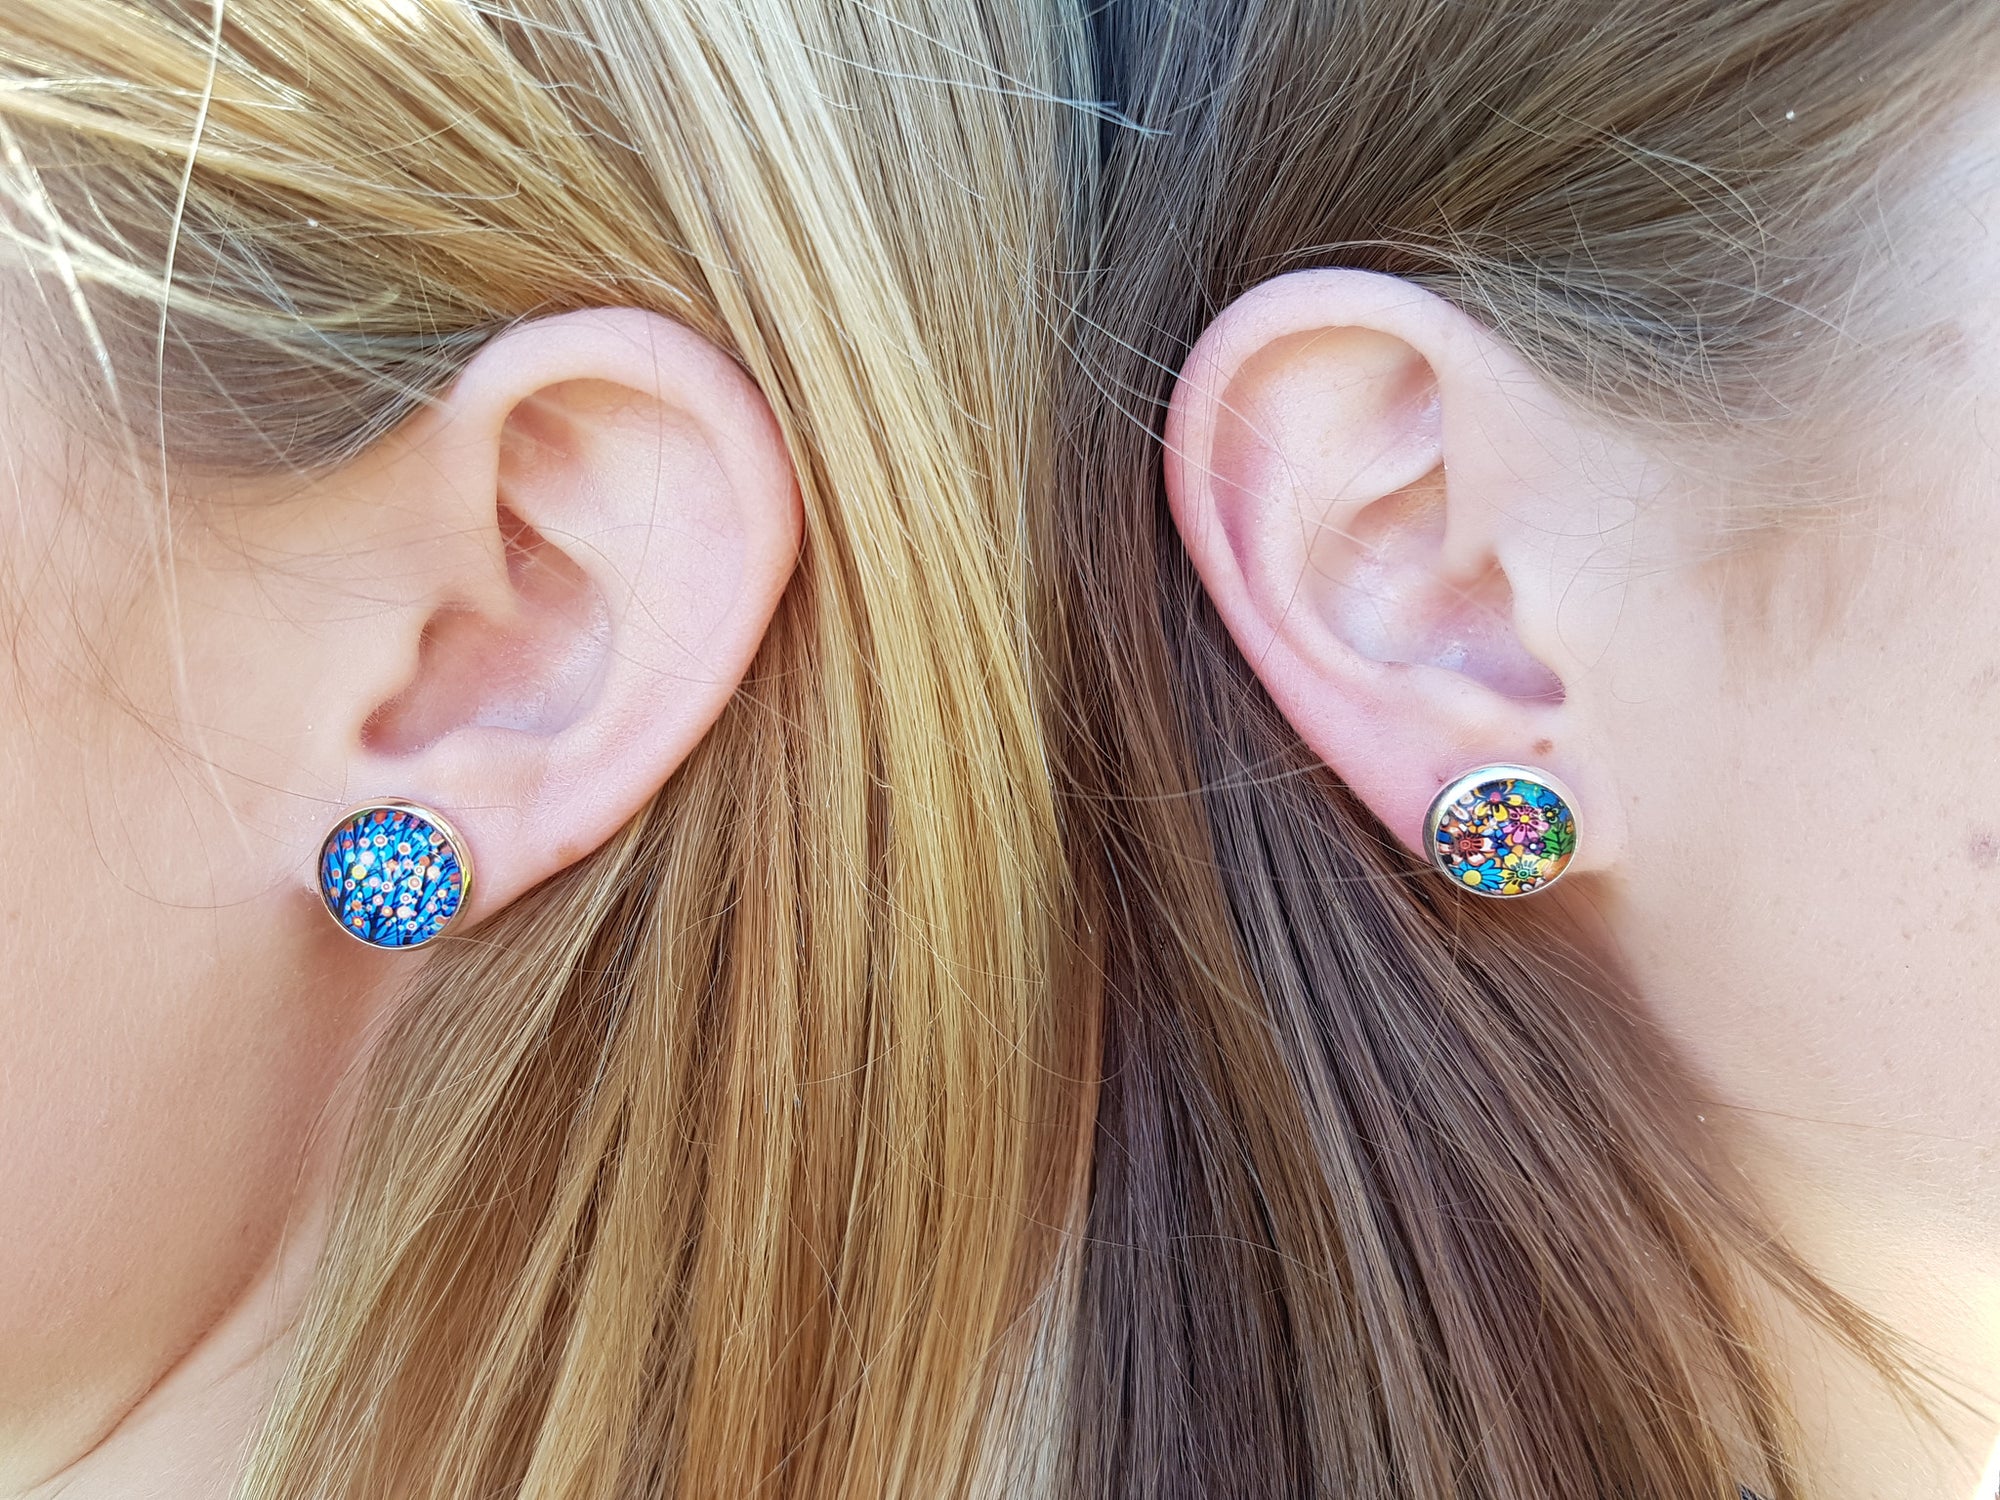 Baby Pink and Silver Leaf Pop Stud Earrings | Ella & Fern